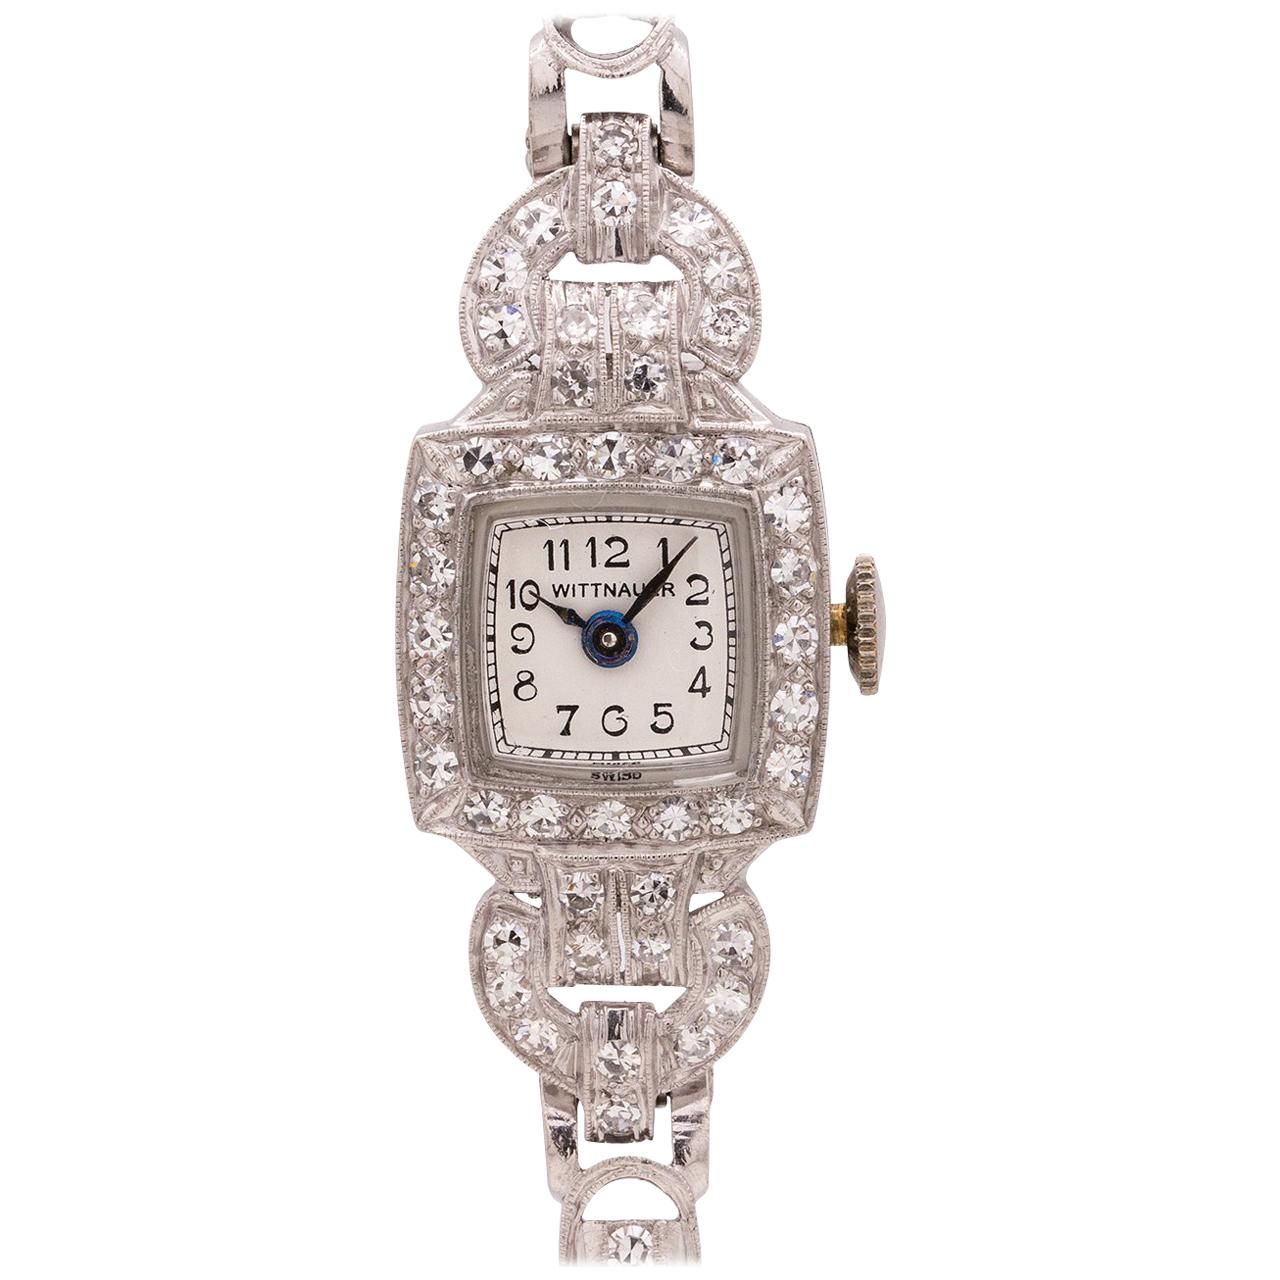 Lady Wittnauer Platinum and Diamond Watch, circa 1940s